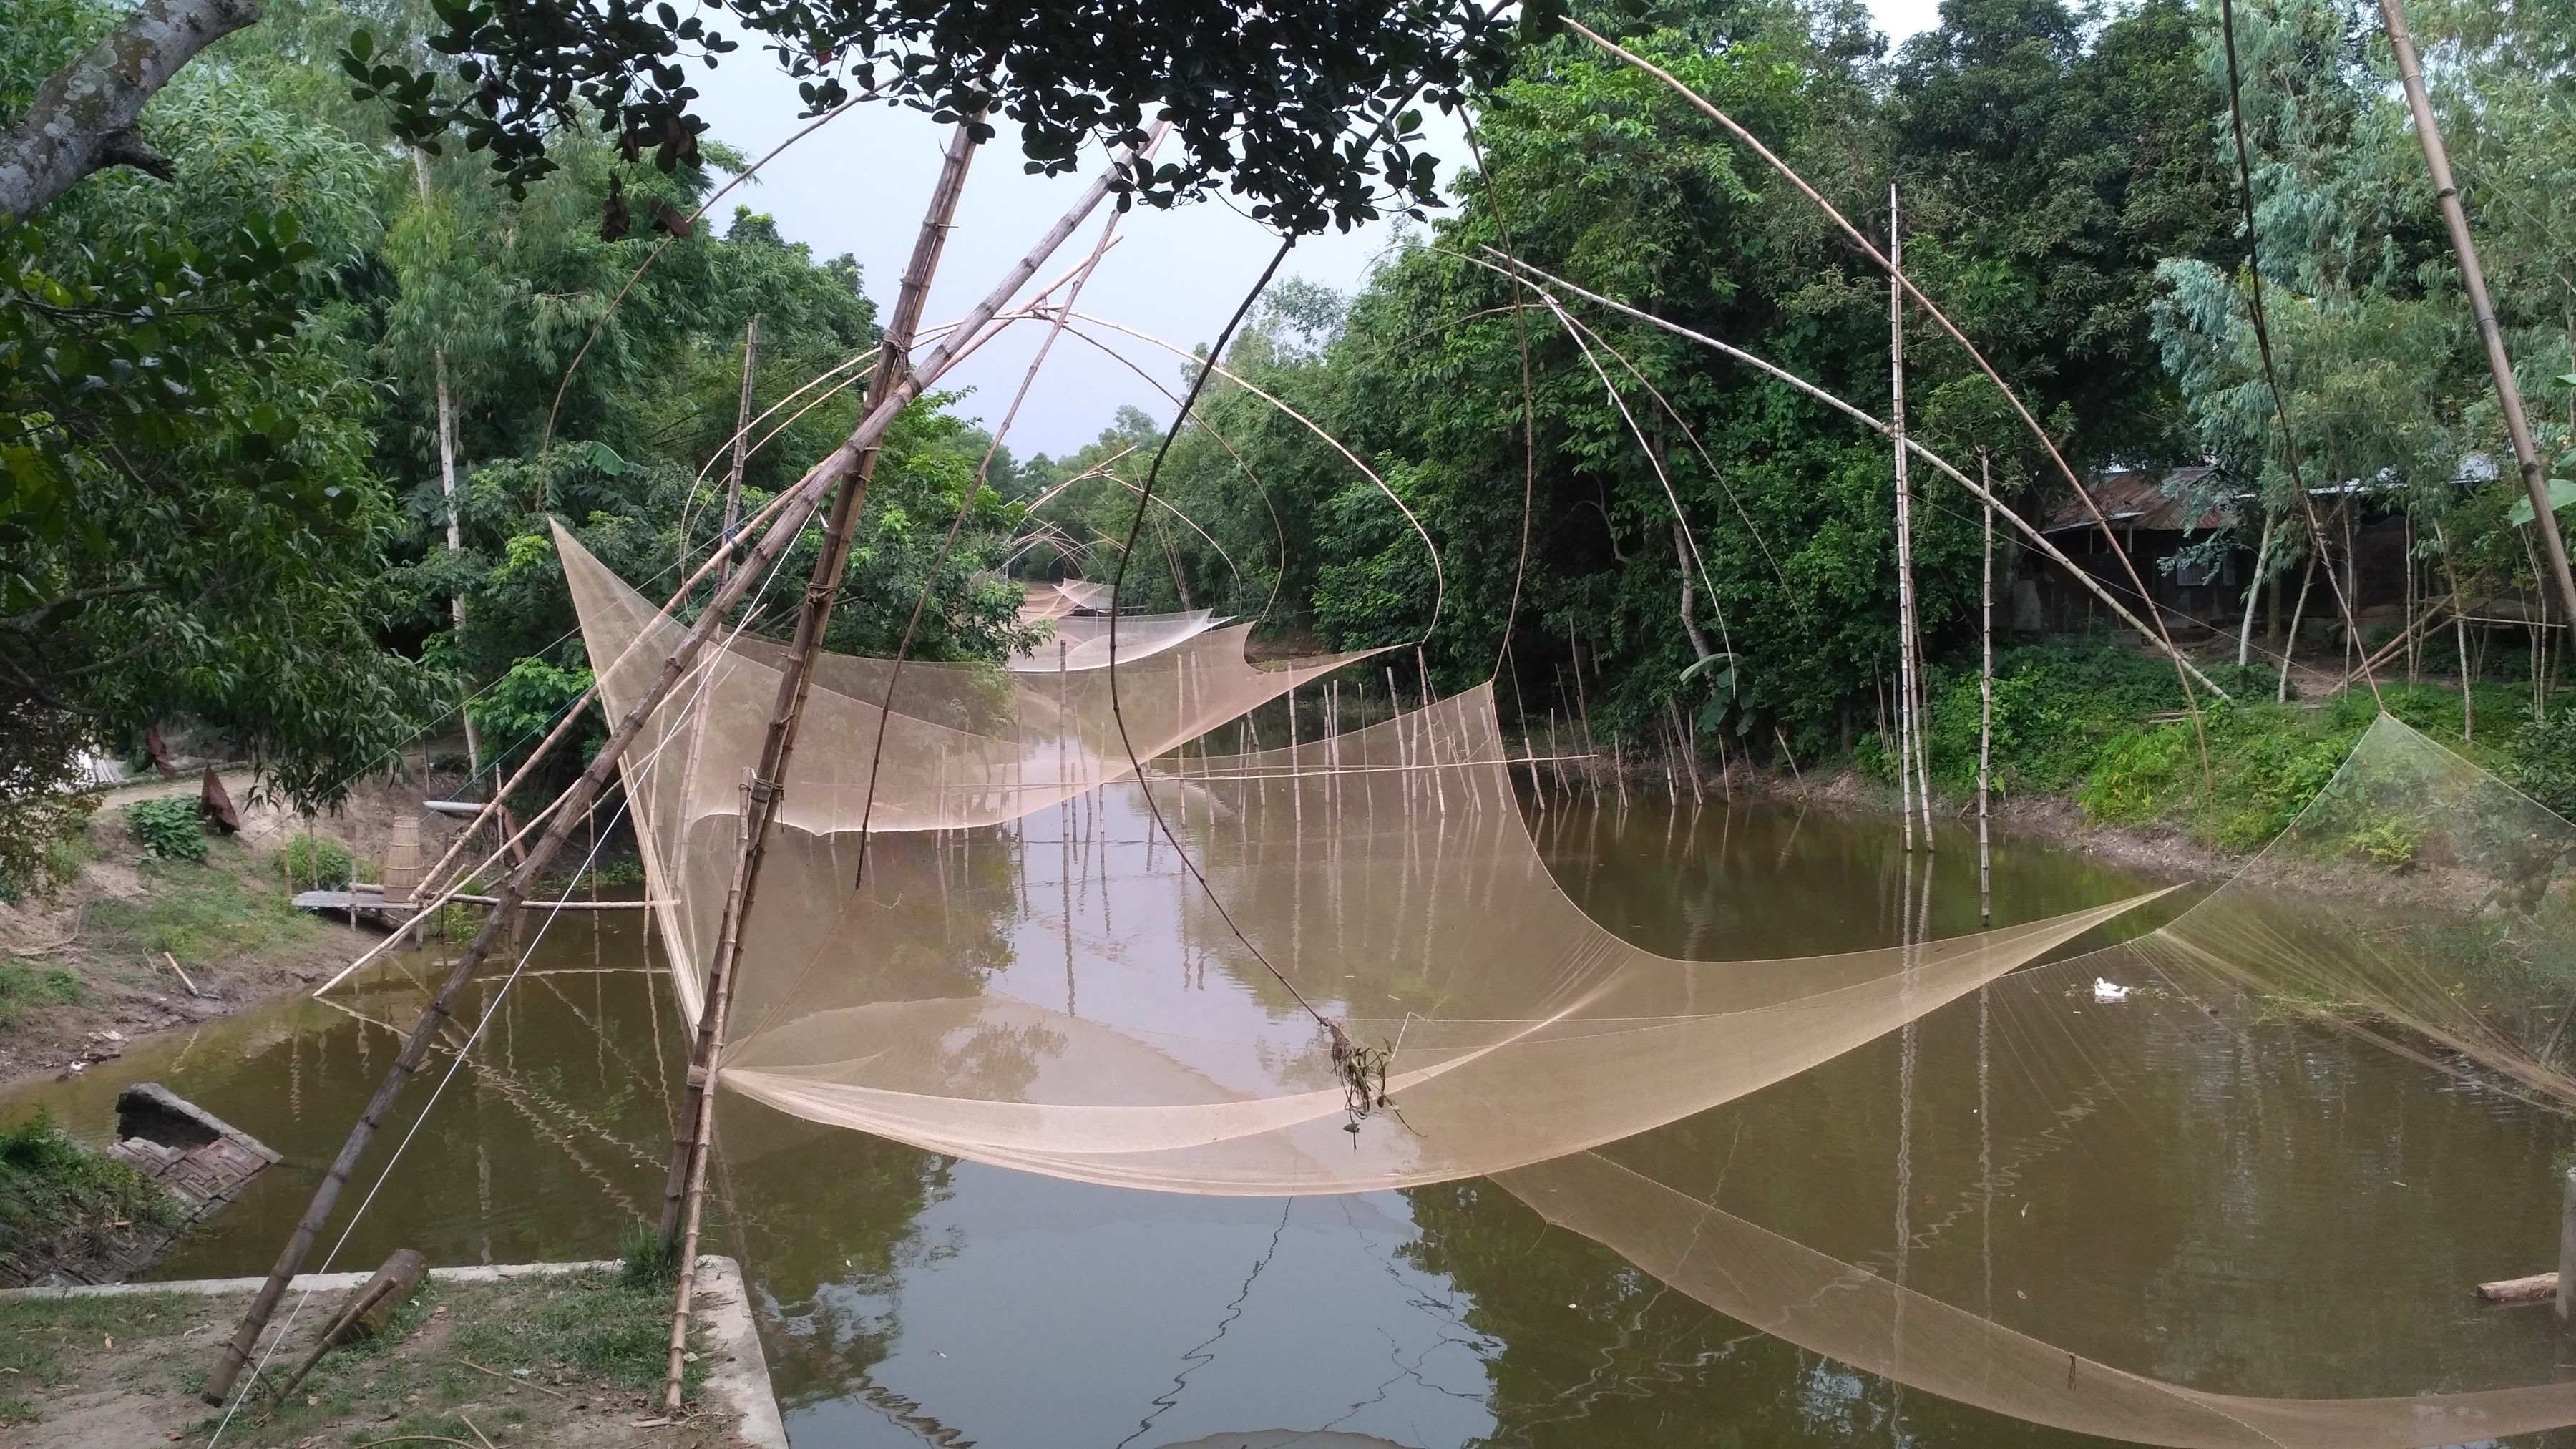 Caption: Fishing net